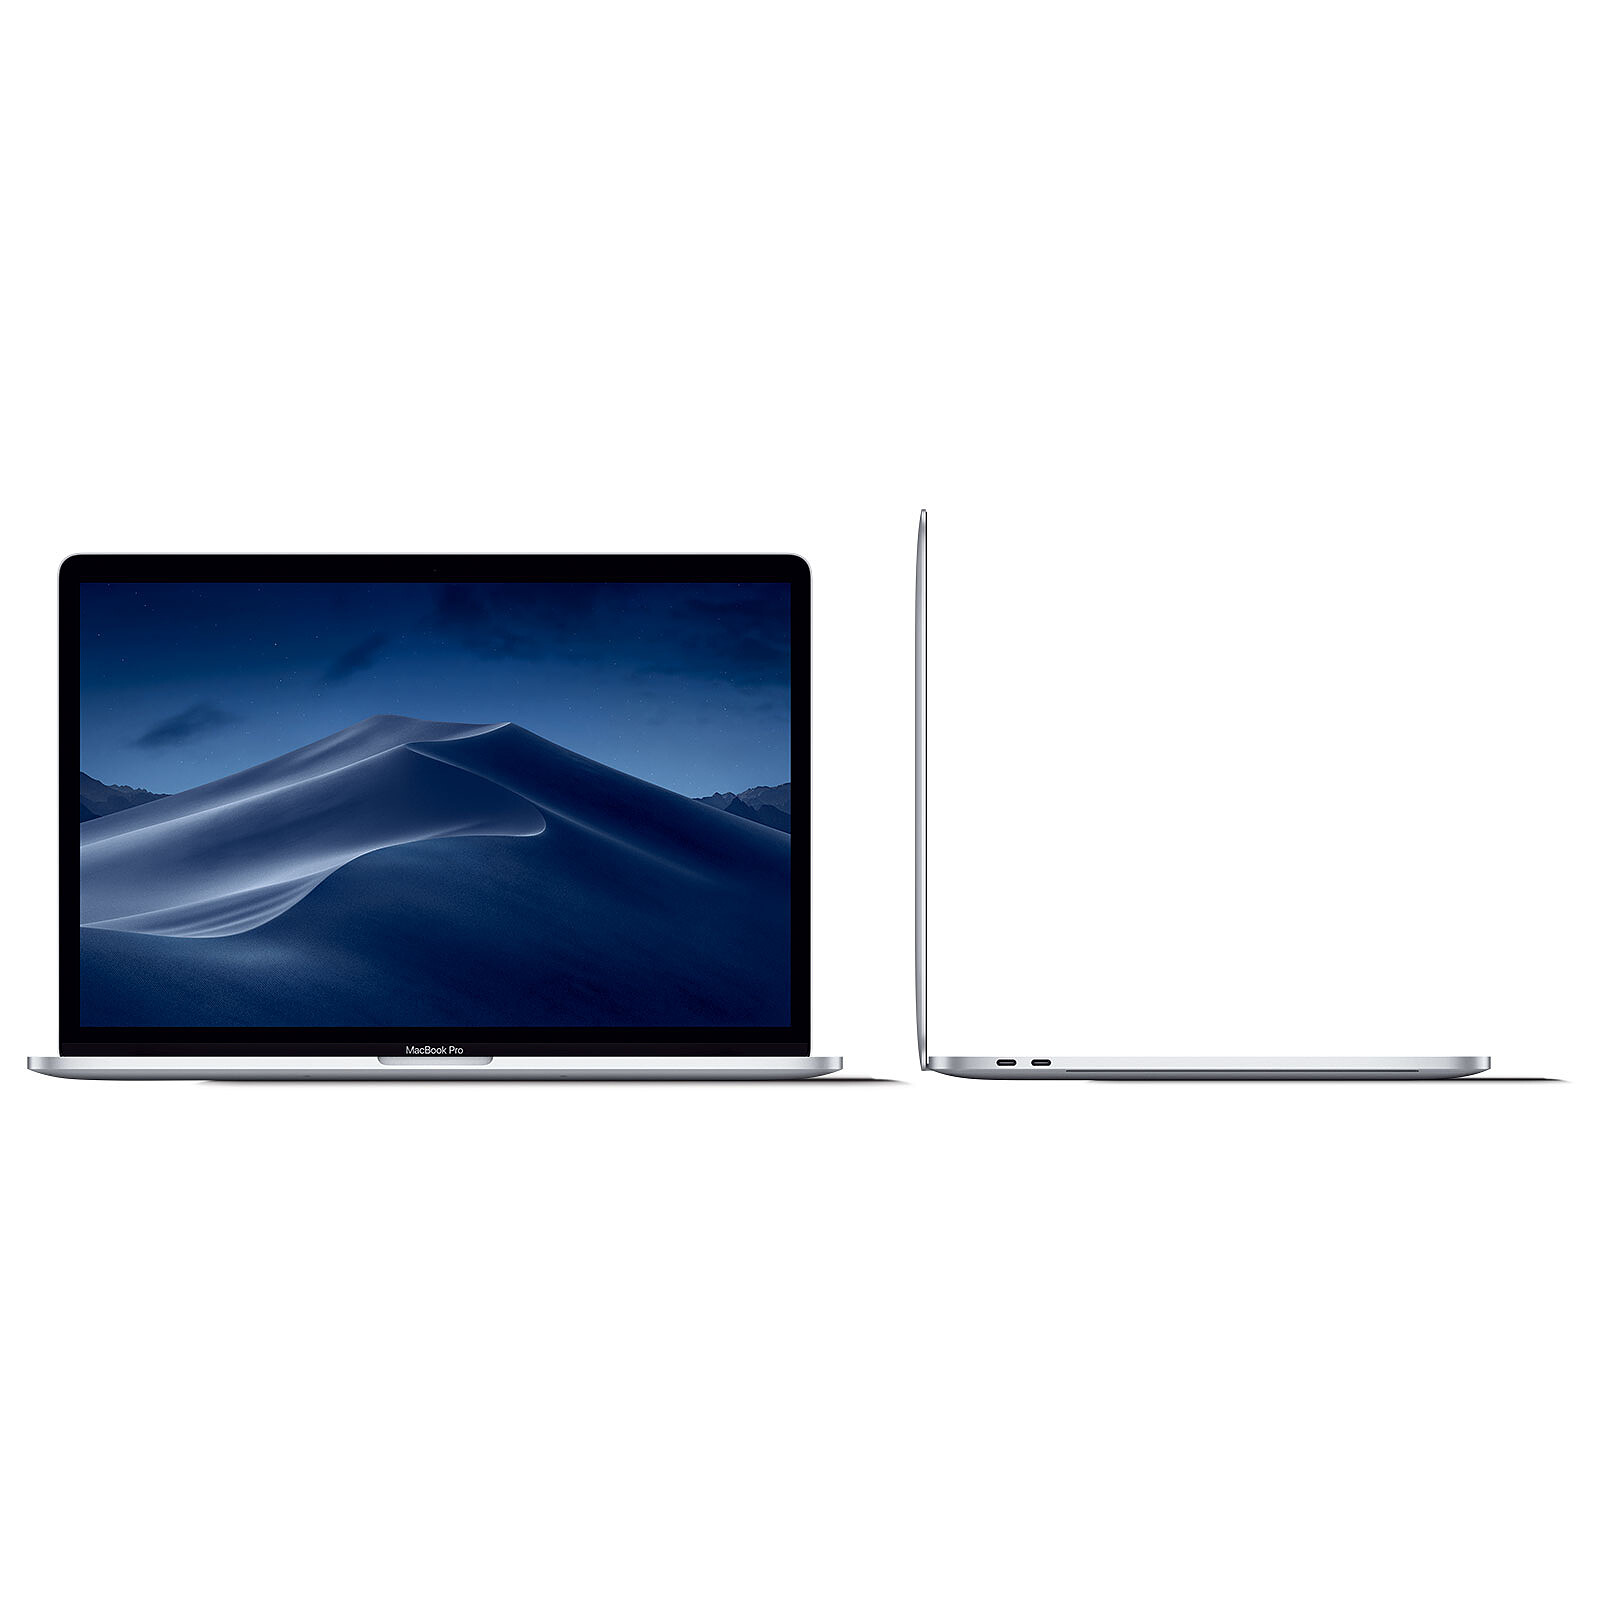 Apple MacBook Pro (2020) 16 Argent (MVVL2FN/A) · Reconditionné - Macbook  reconditionné Apple sur